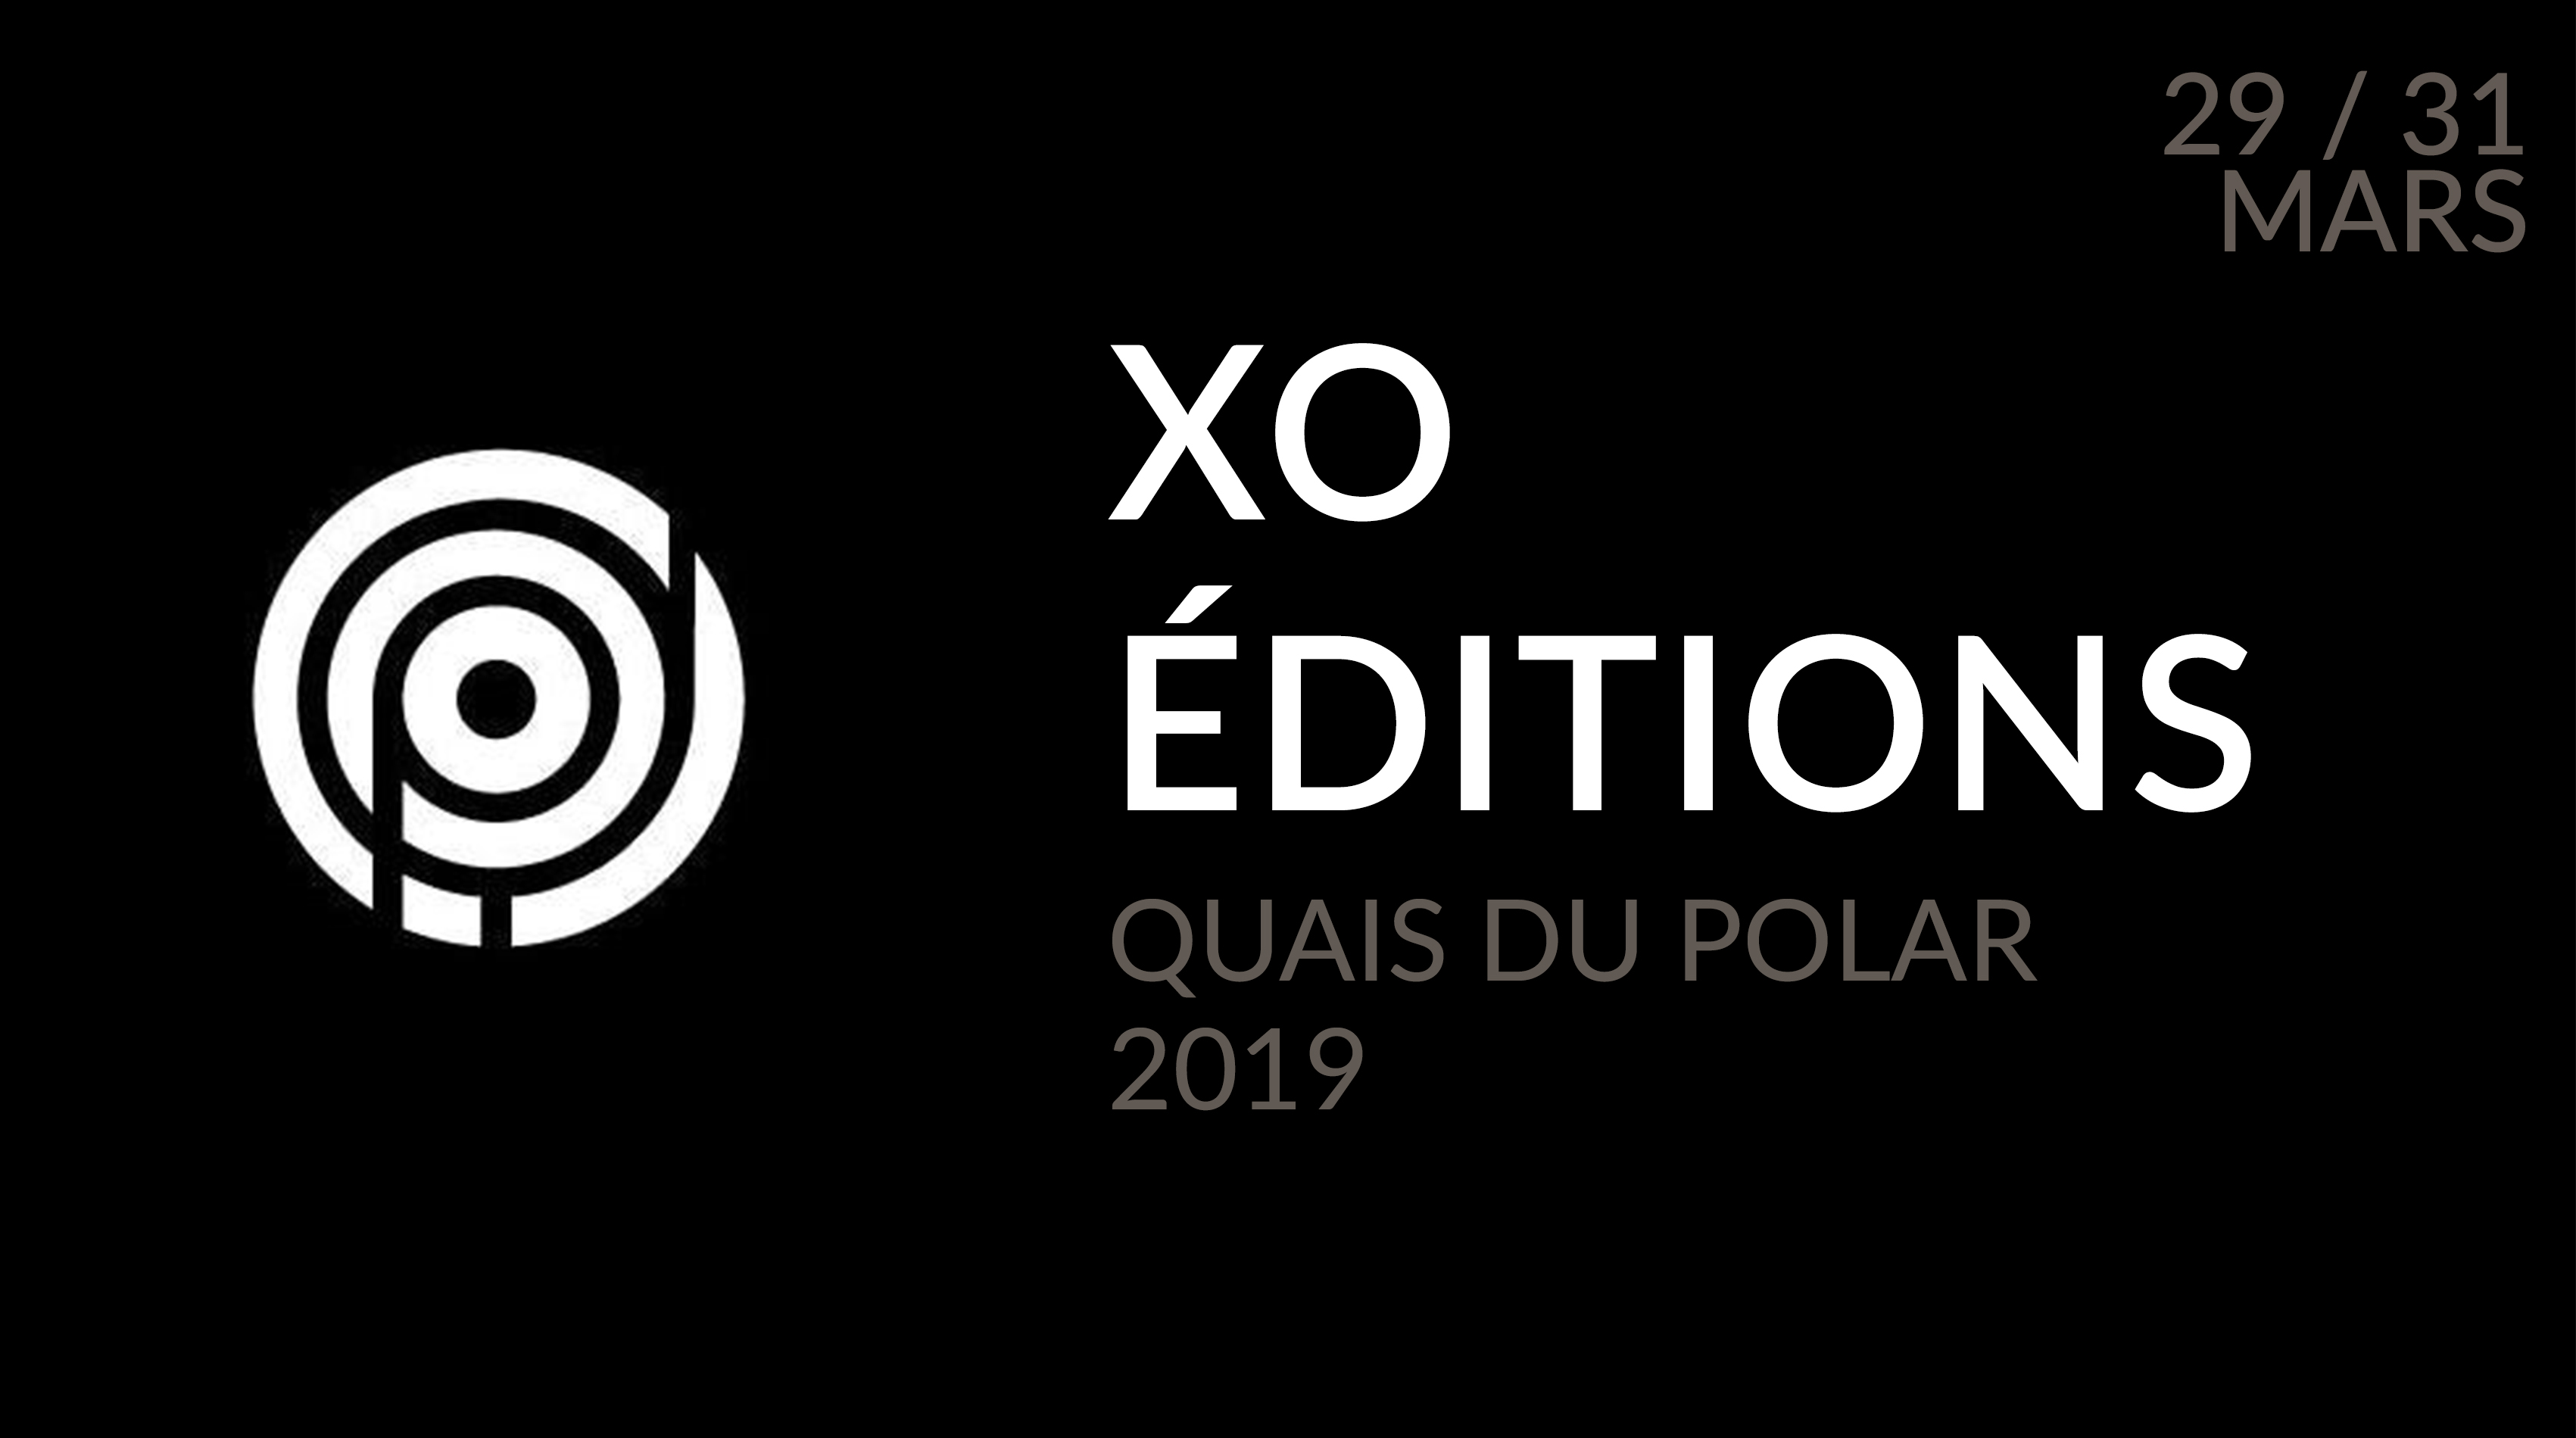 XO ÉDITIONS AU FESTIVAL QUAIS DU POLAR 2019